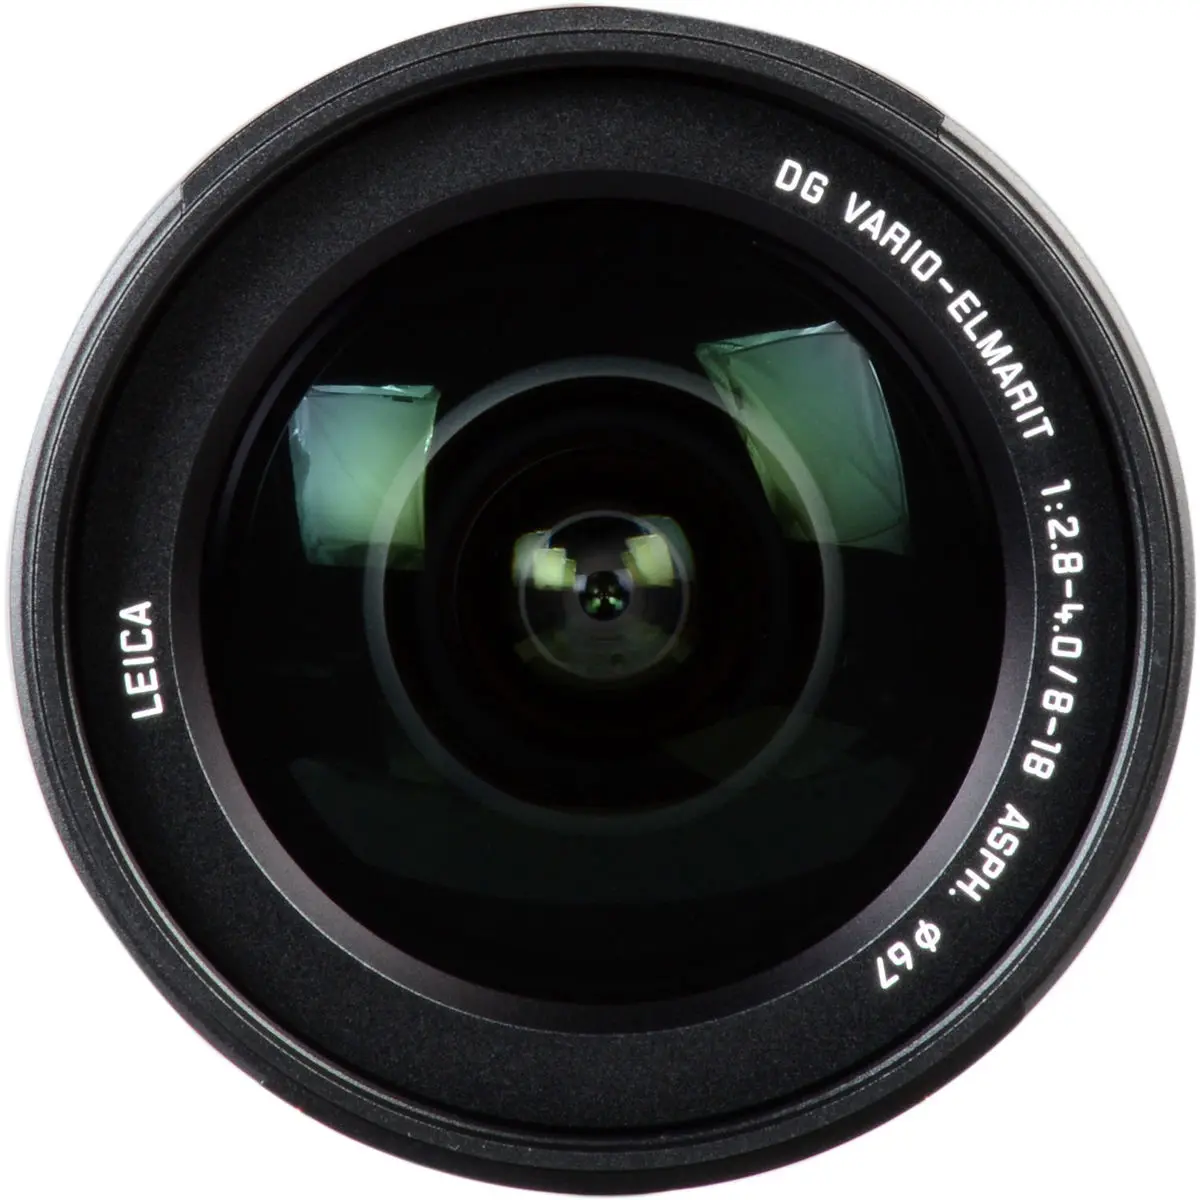 6. Panasonic Leica DG Elmarit 8-18mm f/2.8-4.0 Asph Lens